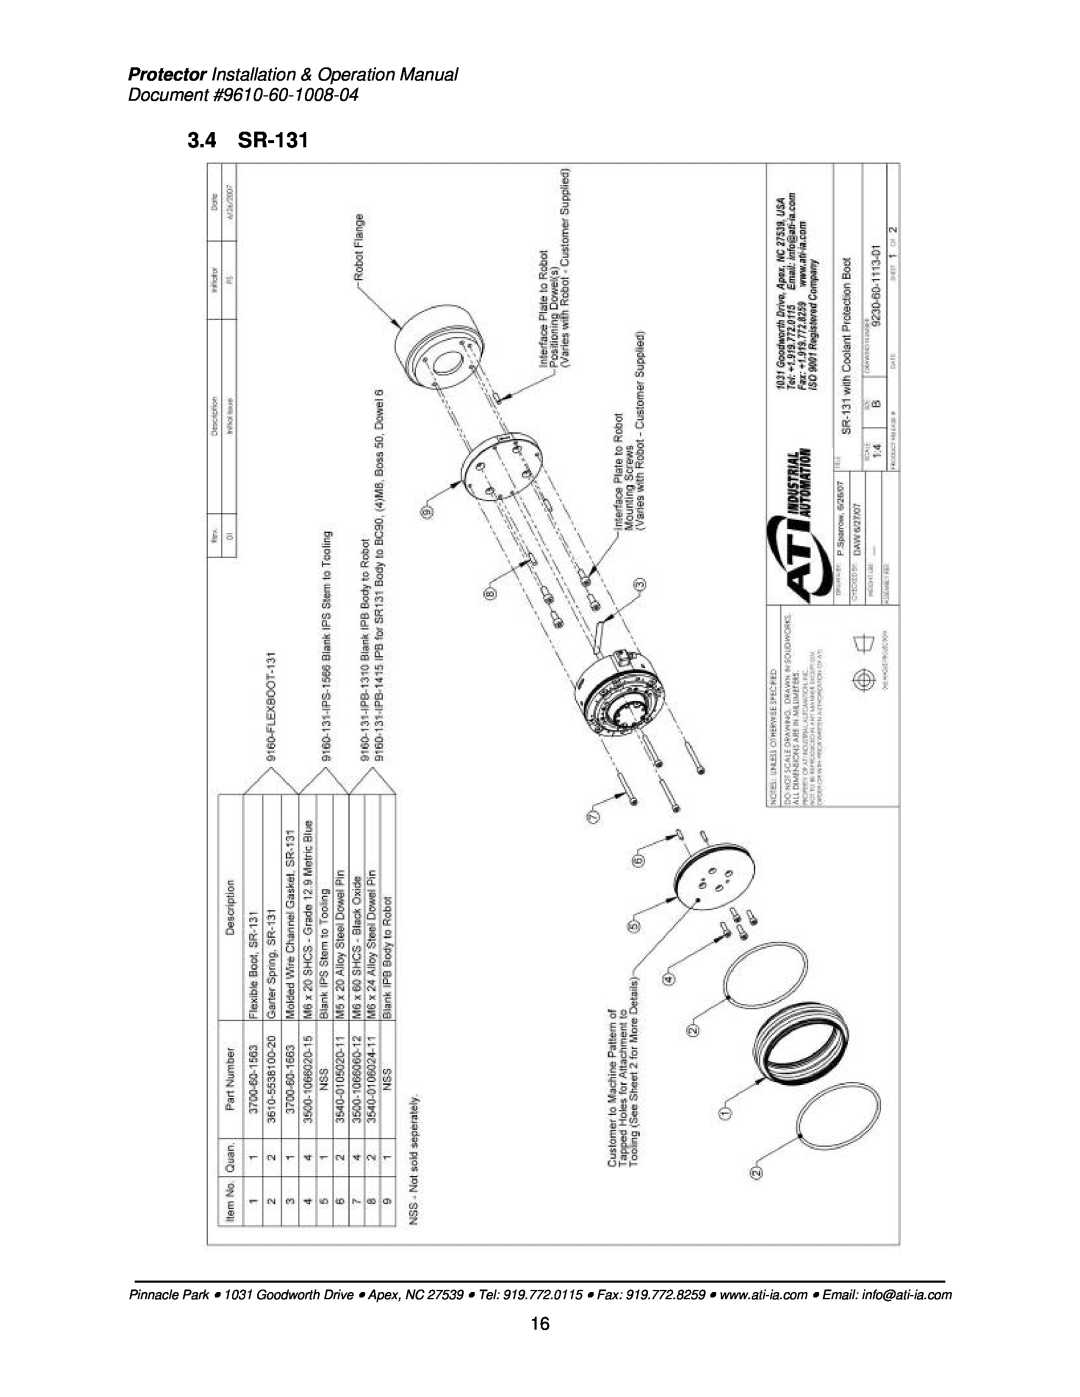 ATI Technologies SR-221, SR-61, SR-176 3.4 SR-131, Protector Installation & Operation Manual Document #9610-60-1008-04 